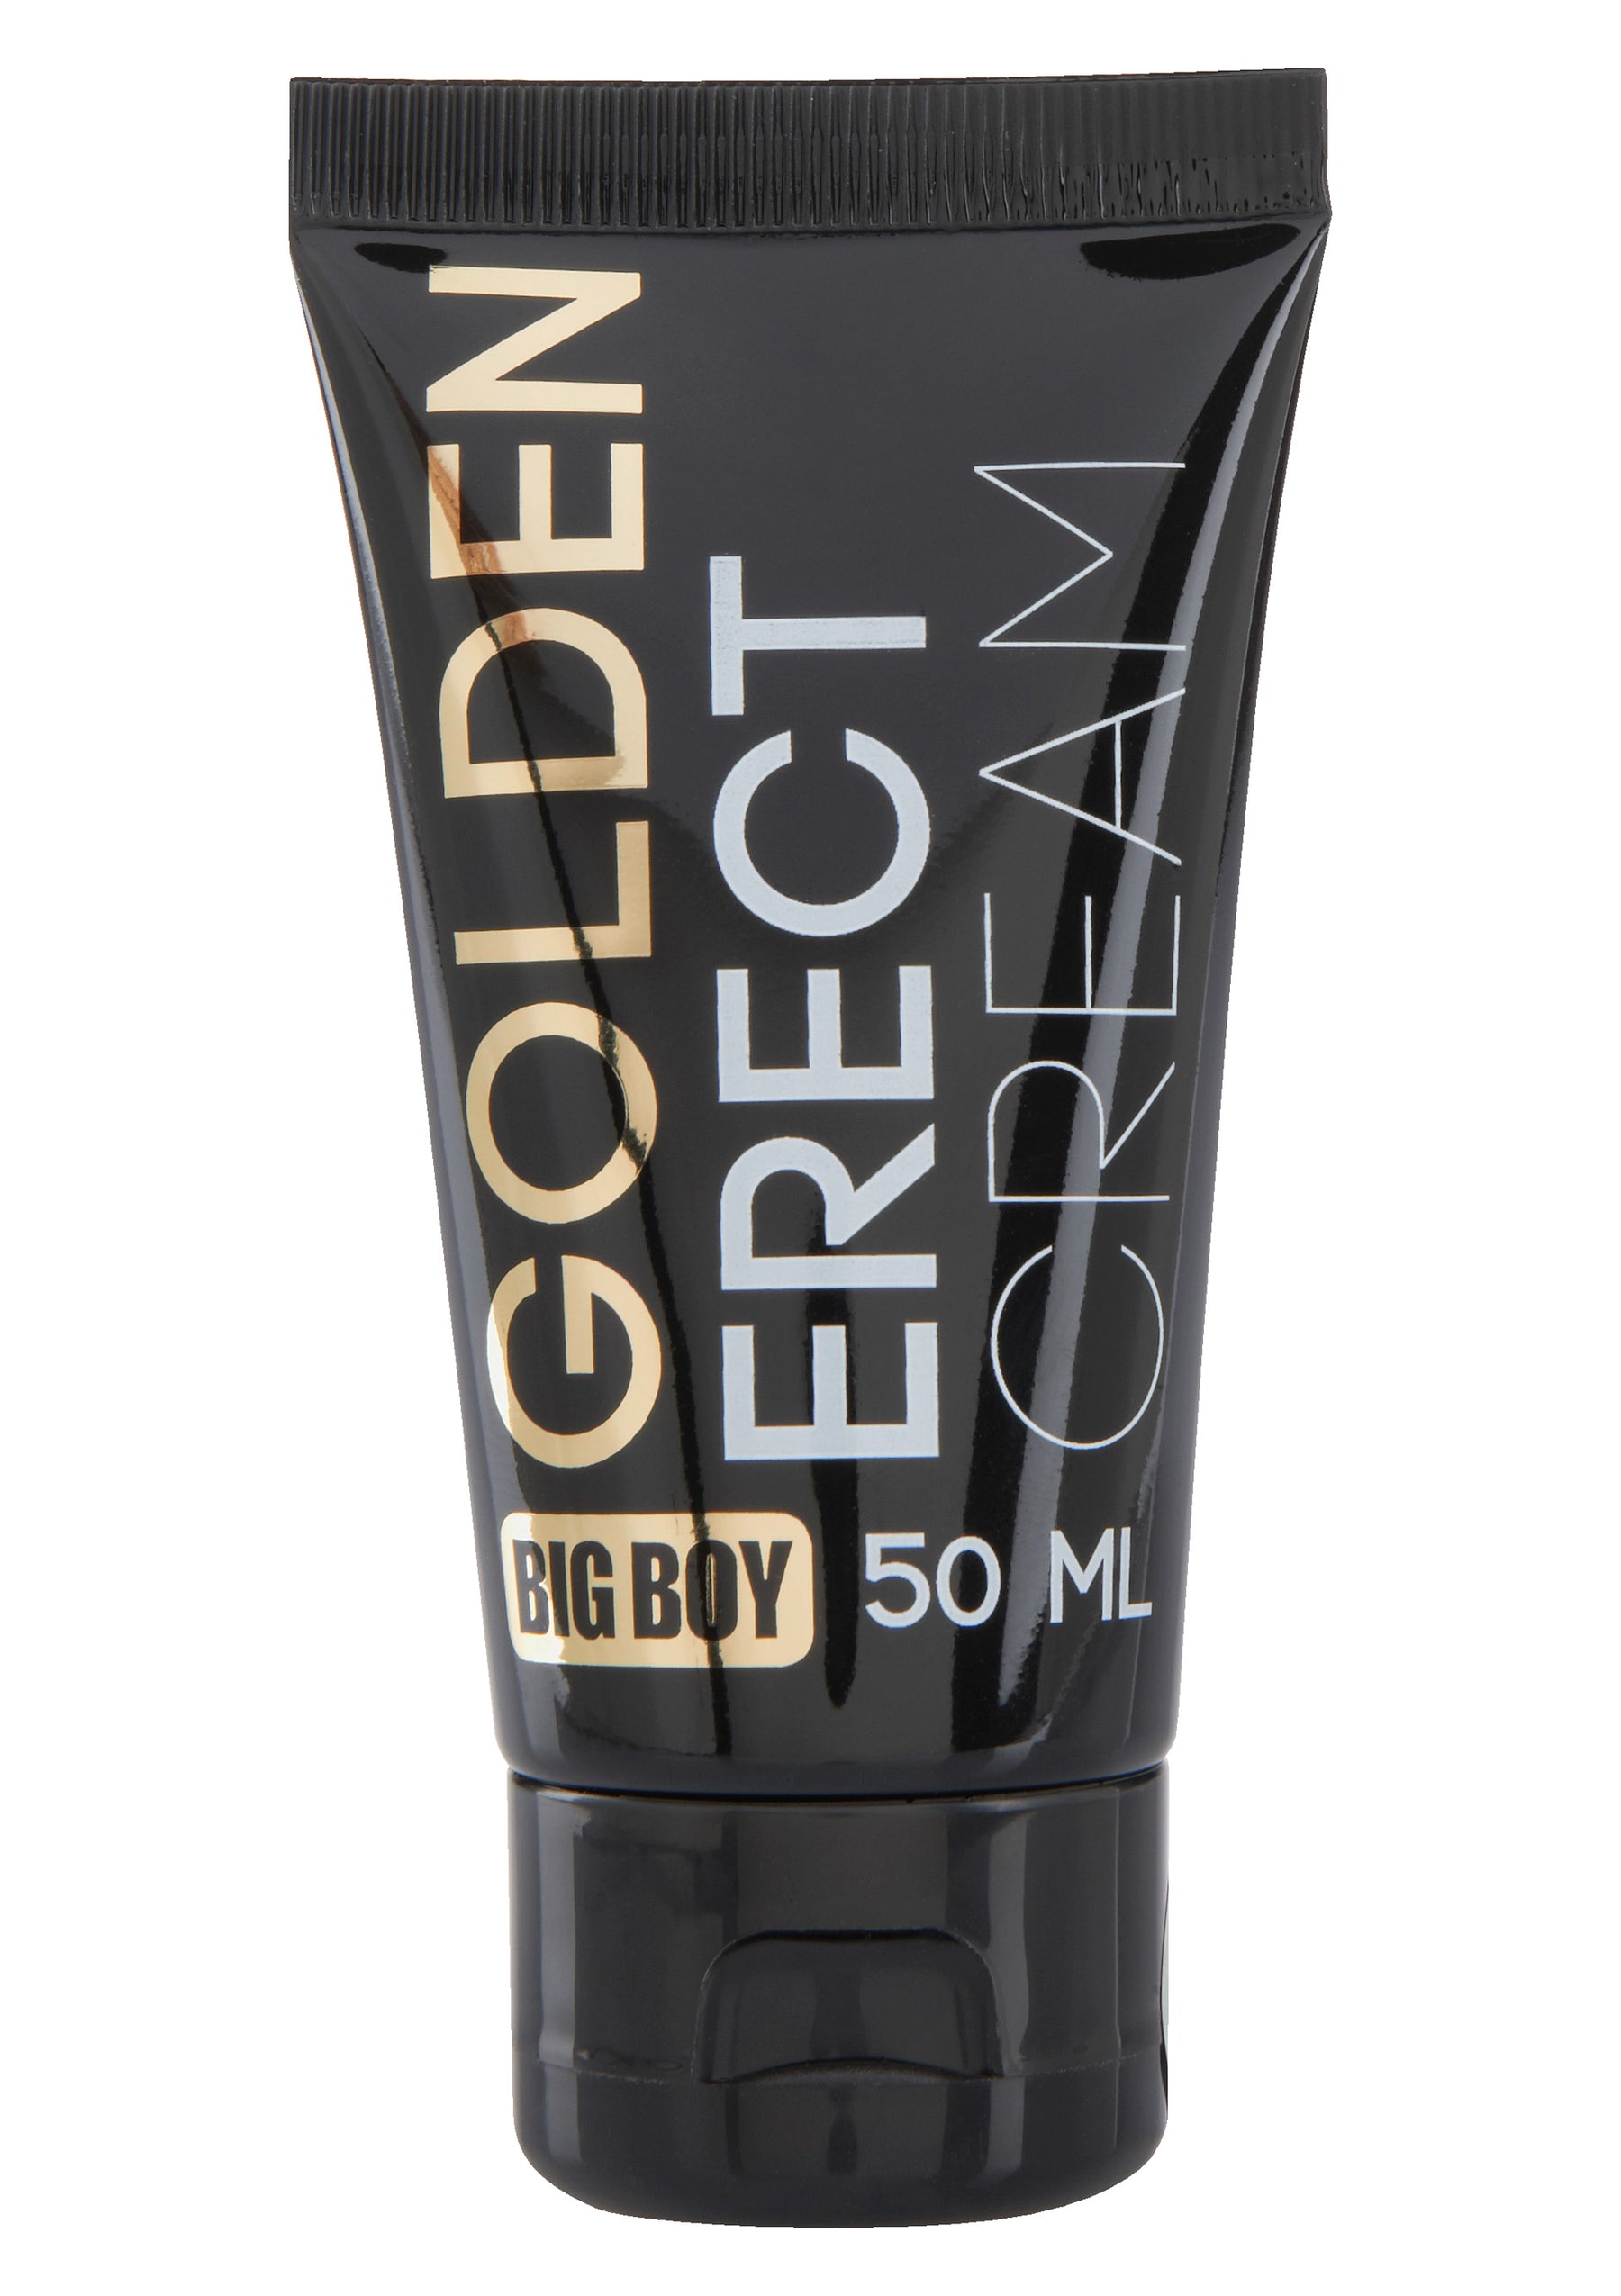 Big Boy Golden Erect Cream50ml-erotic-world-munchen.myshopify.com